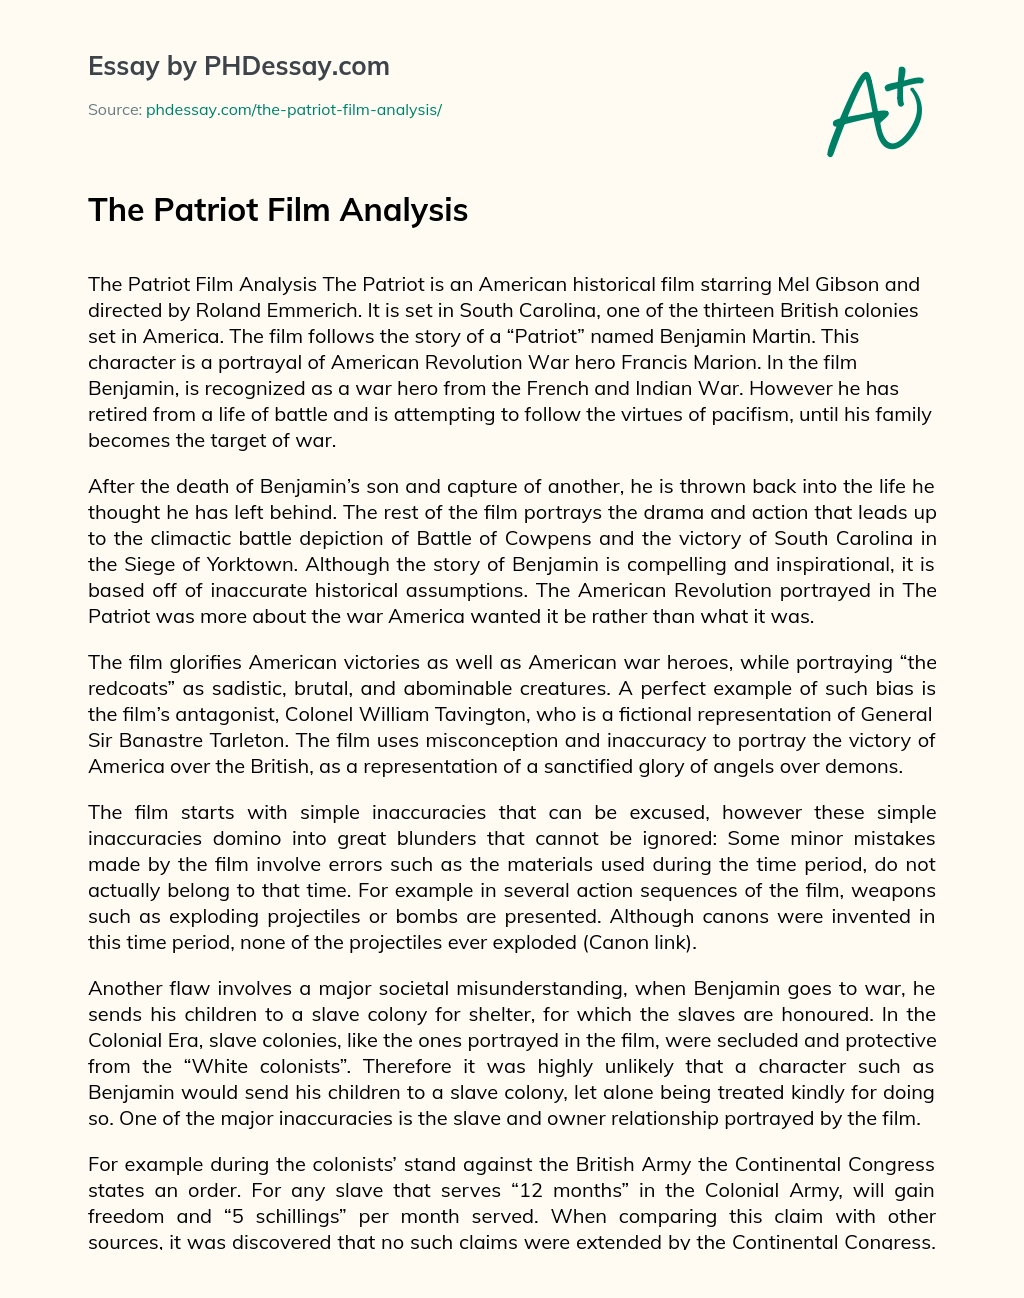 The Patriot Film Analysis - PHDessay.com